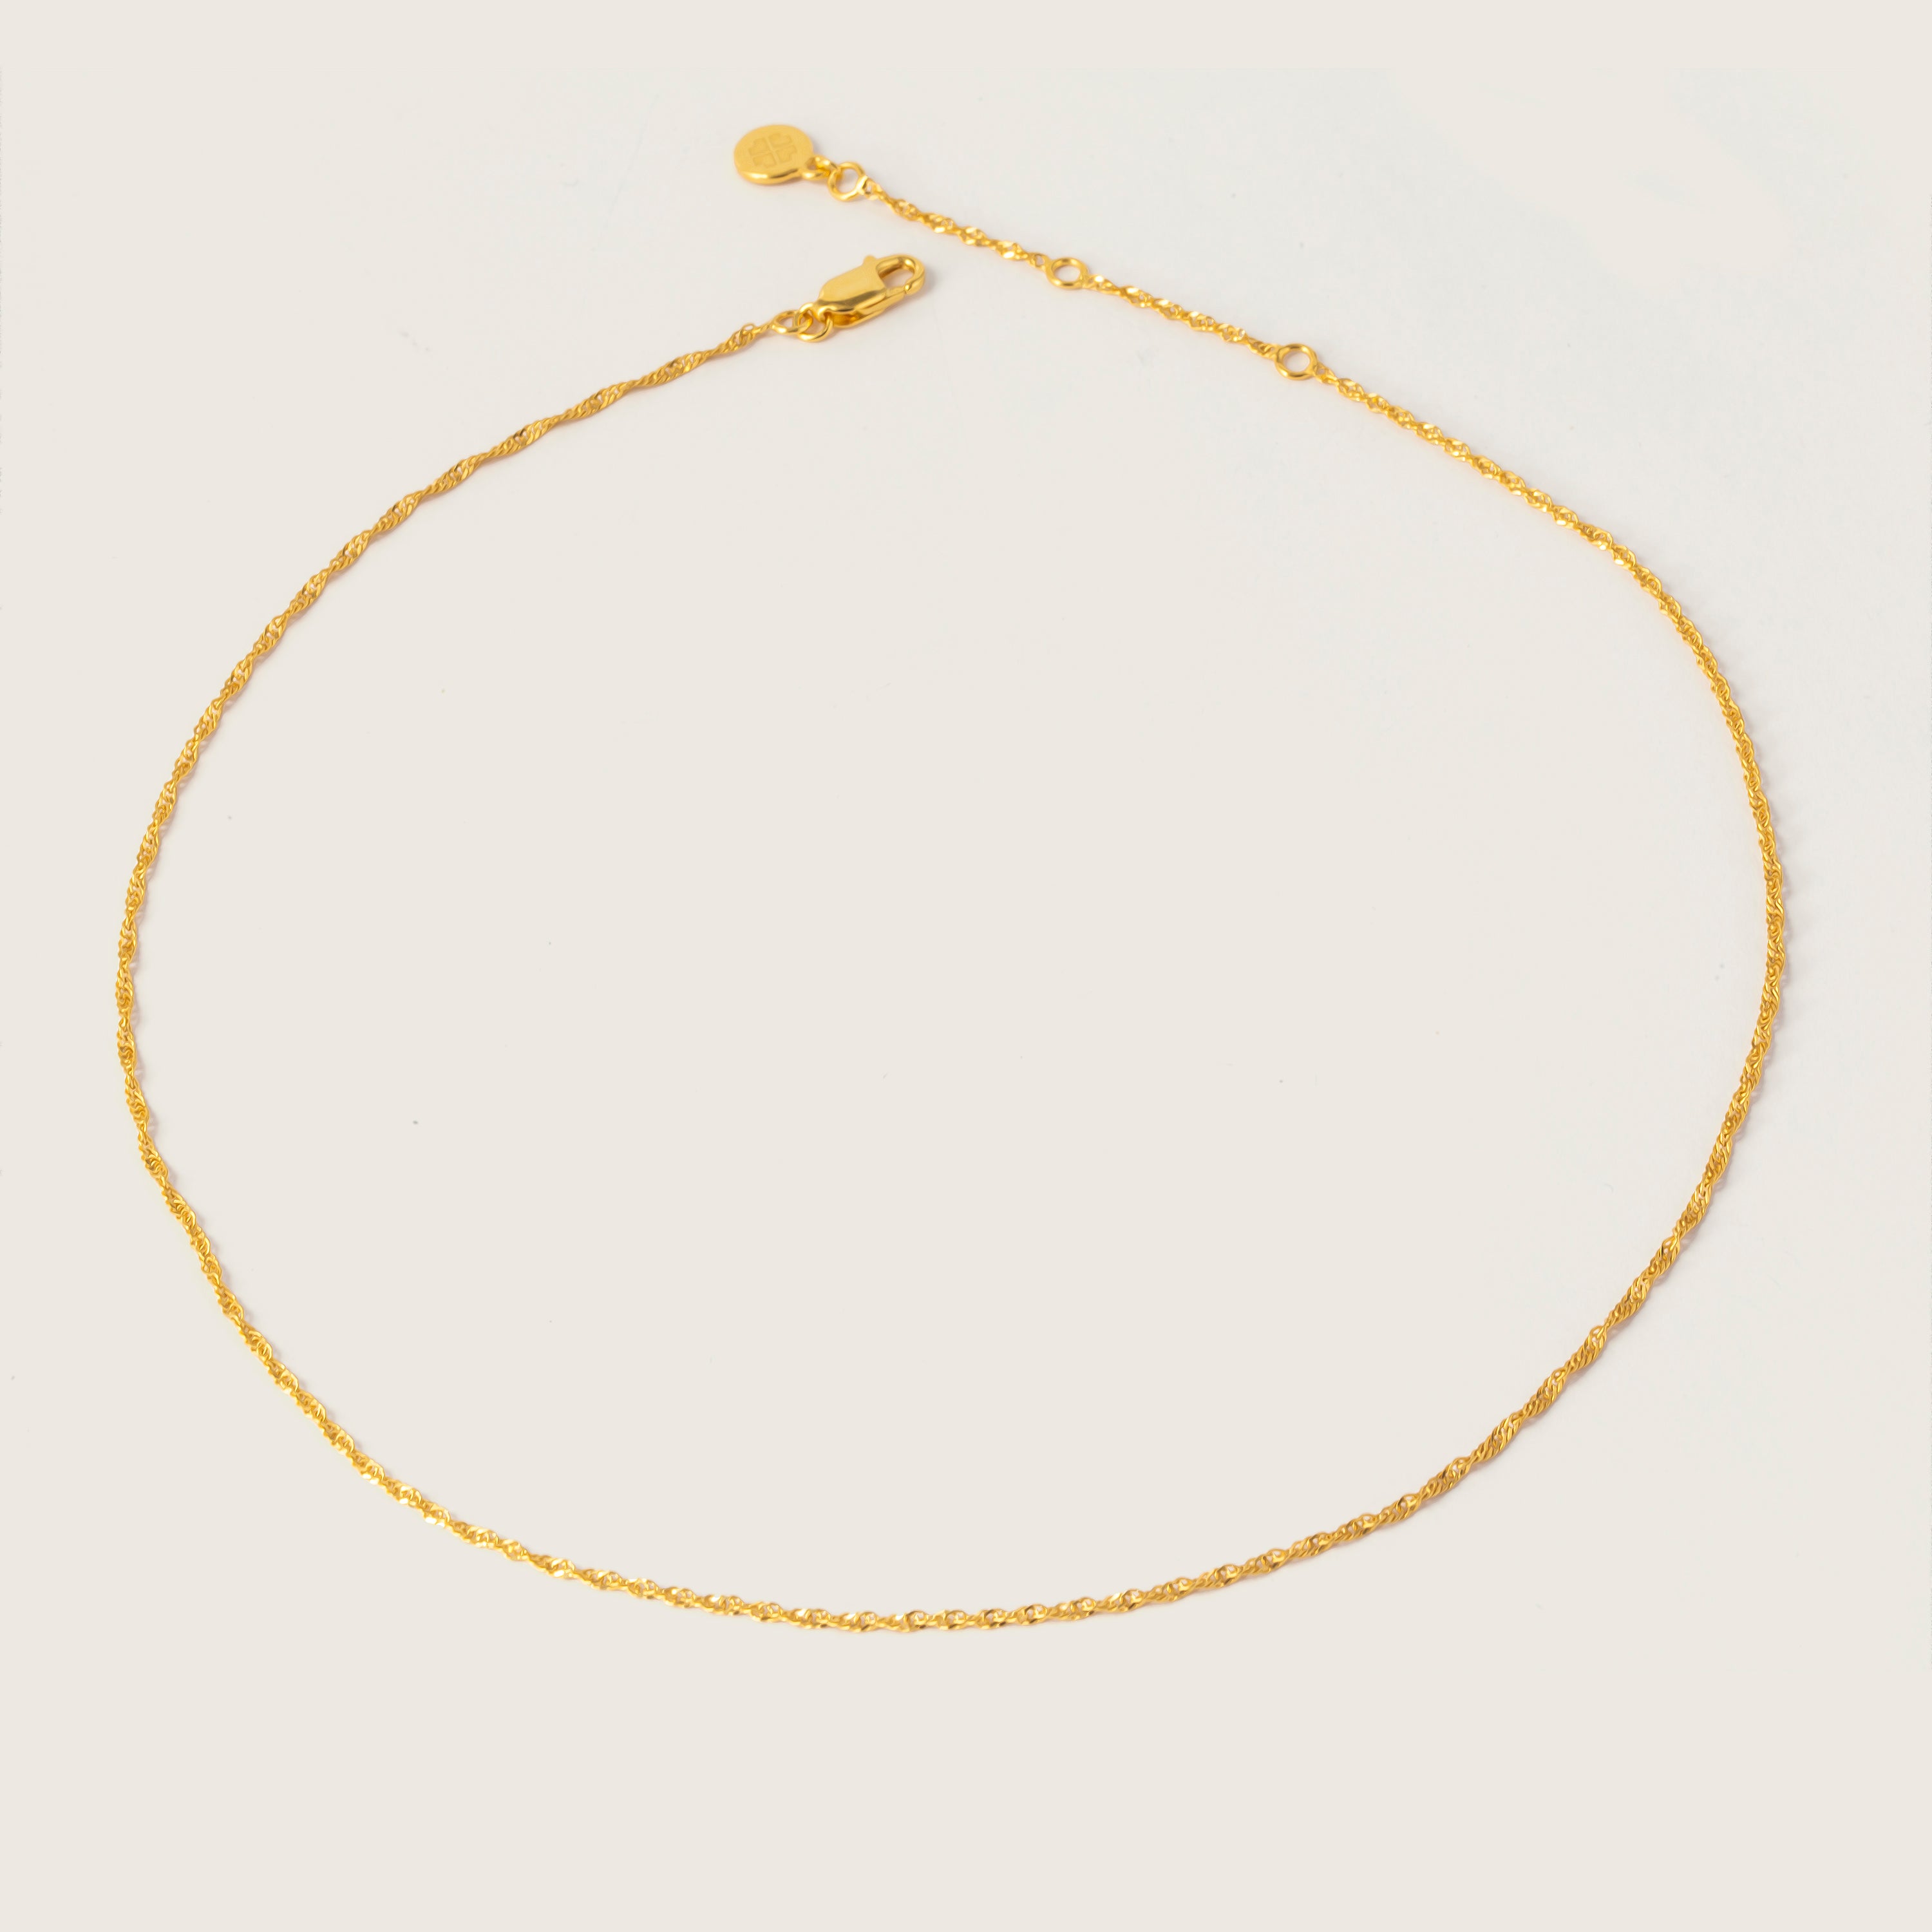 Gold Singapore Chain Choker Necklace